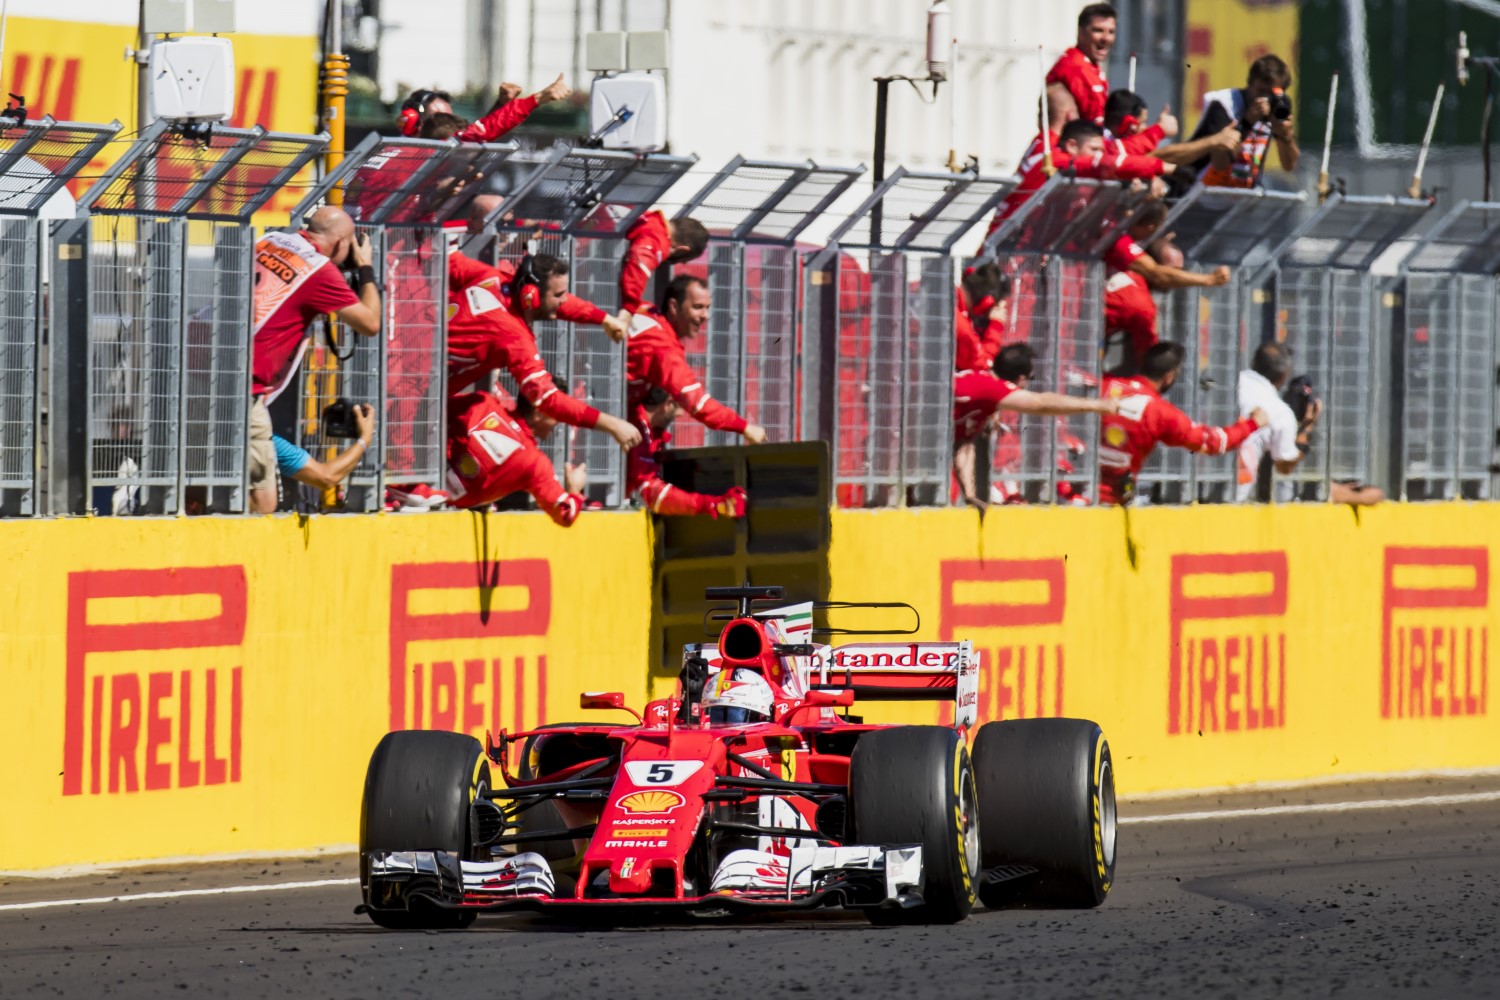 Vettel takes the win